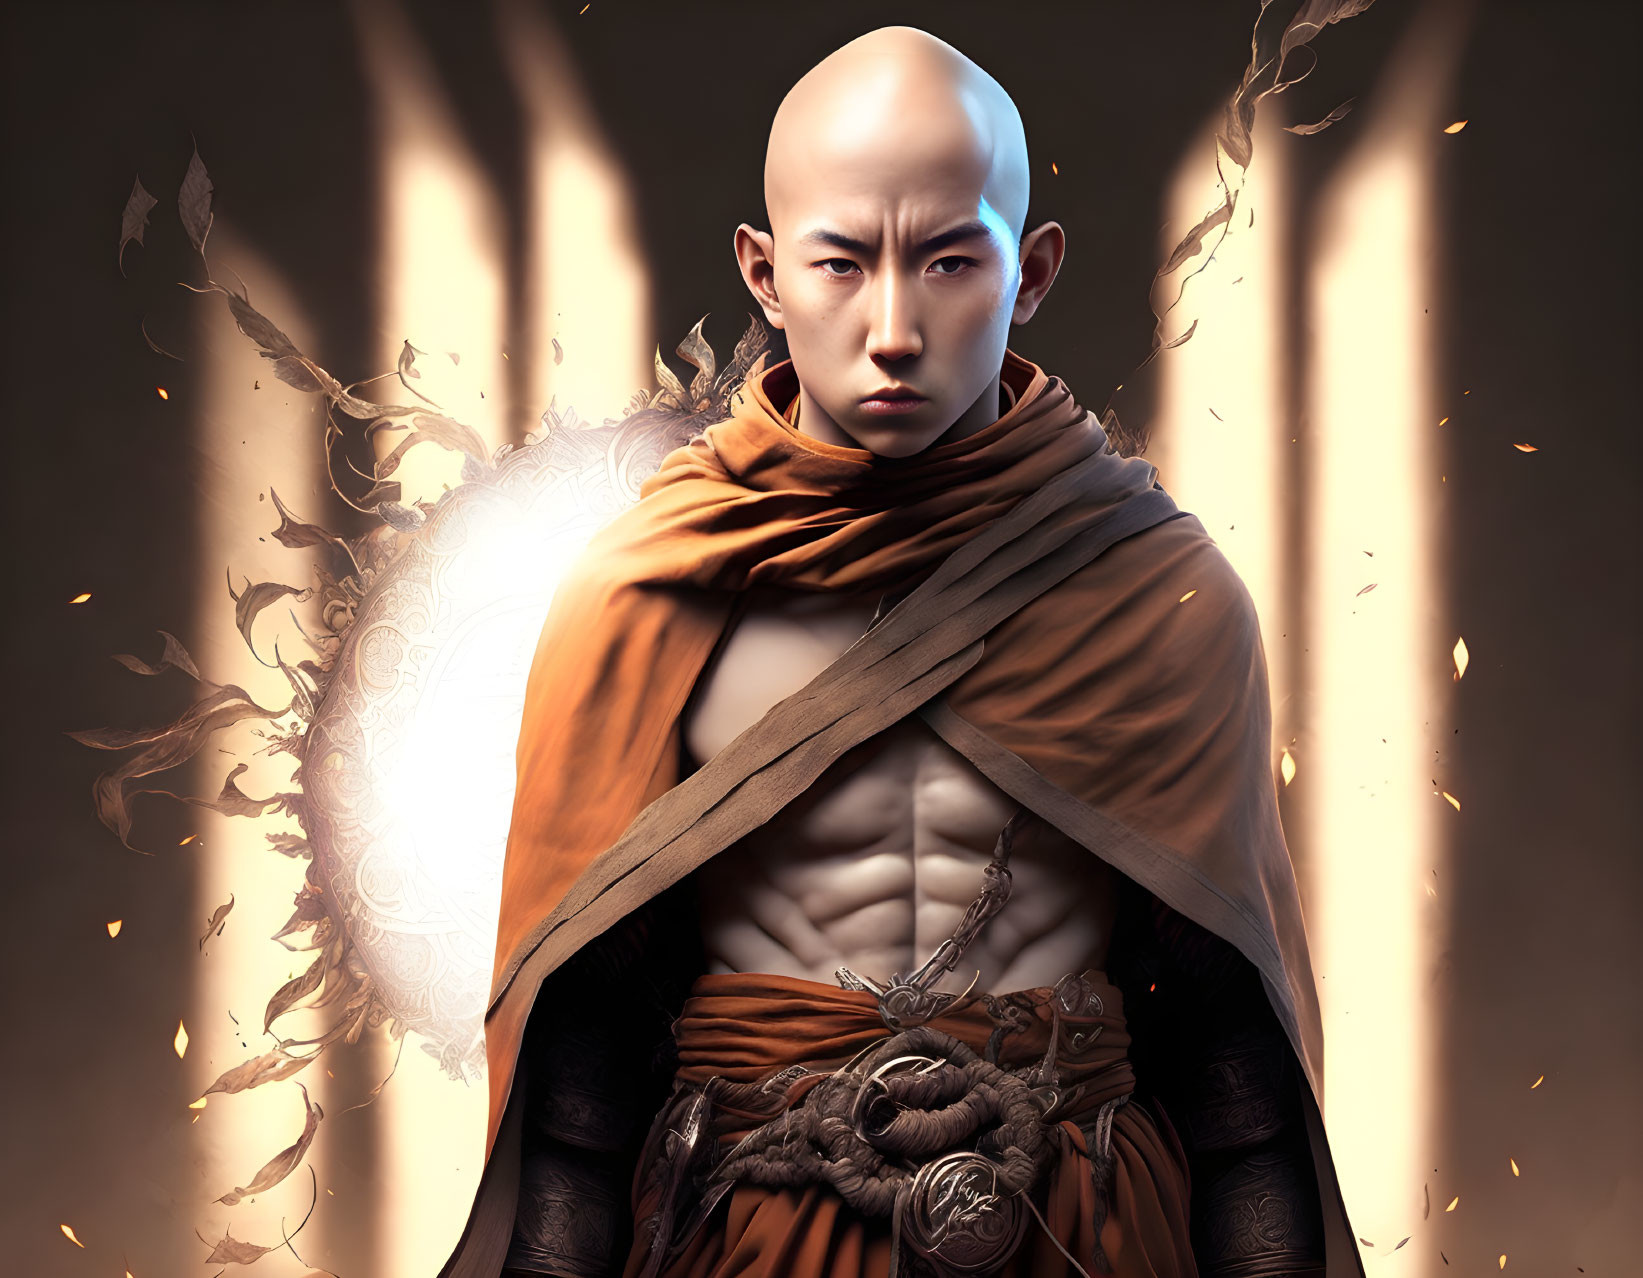 Monk apprentice